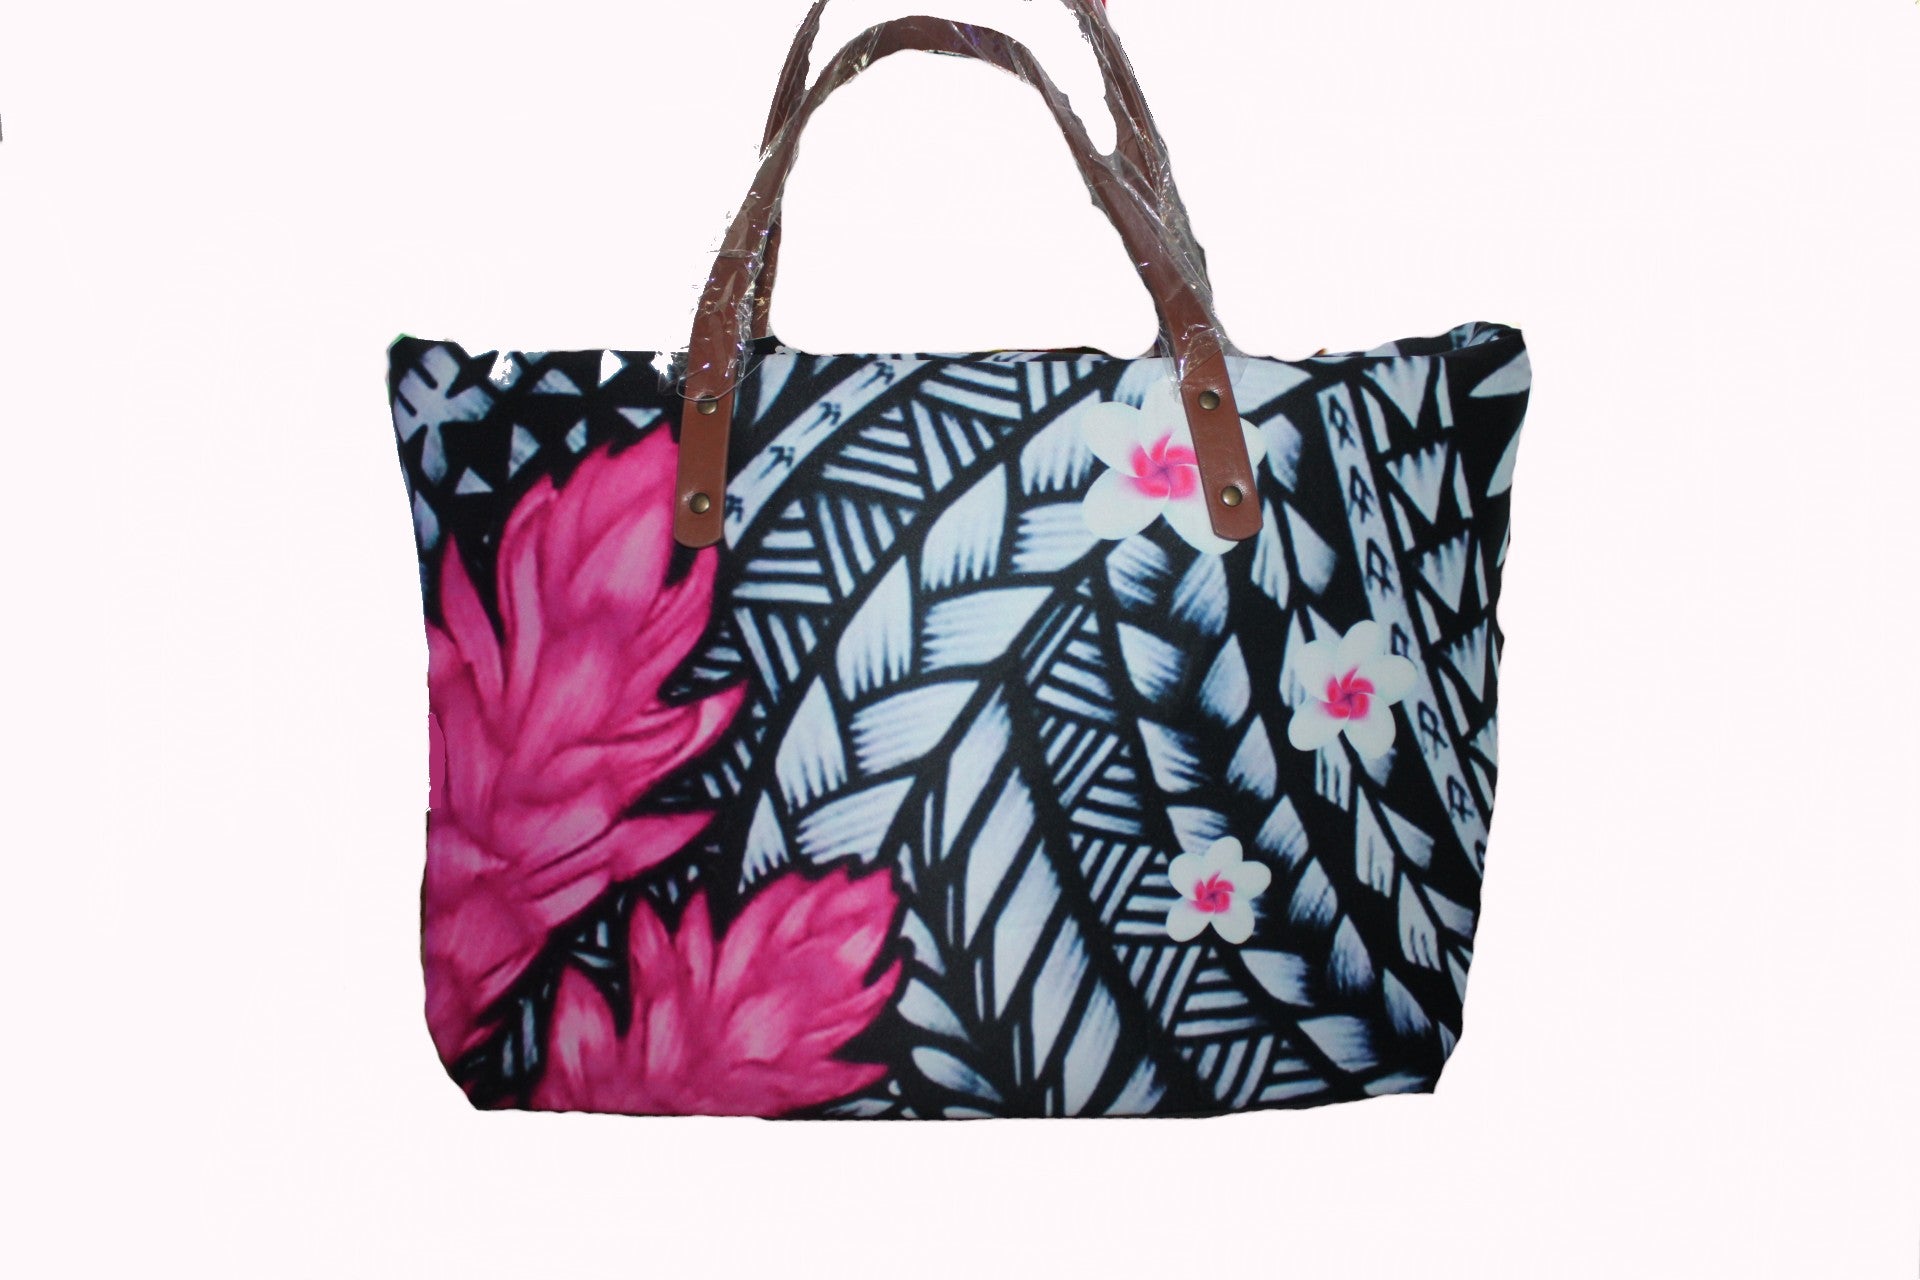 Samoan Design Handbag